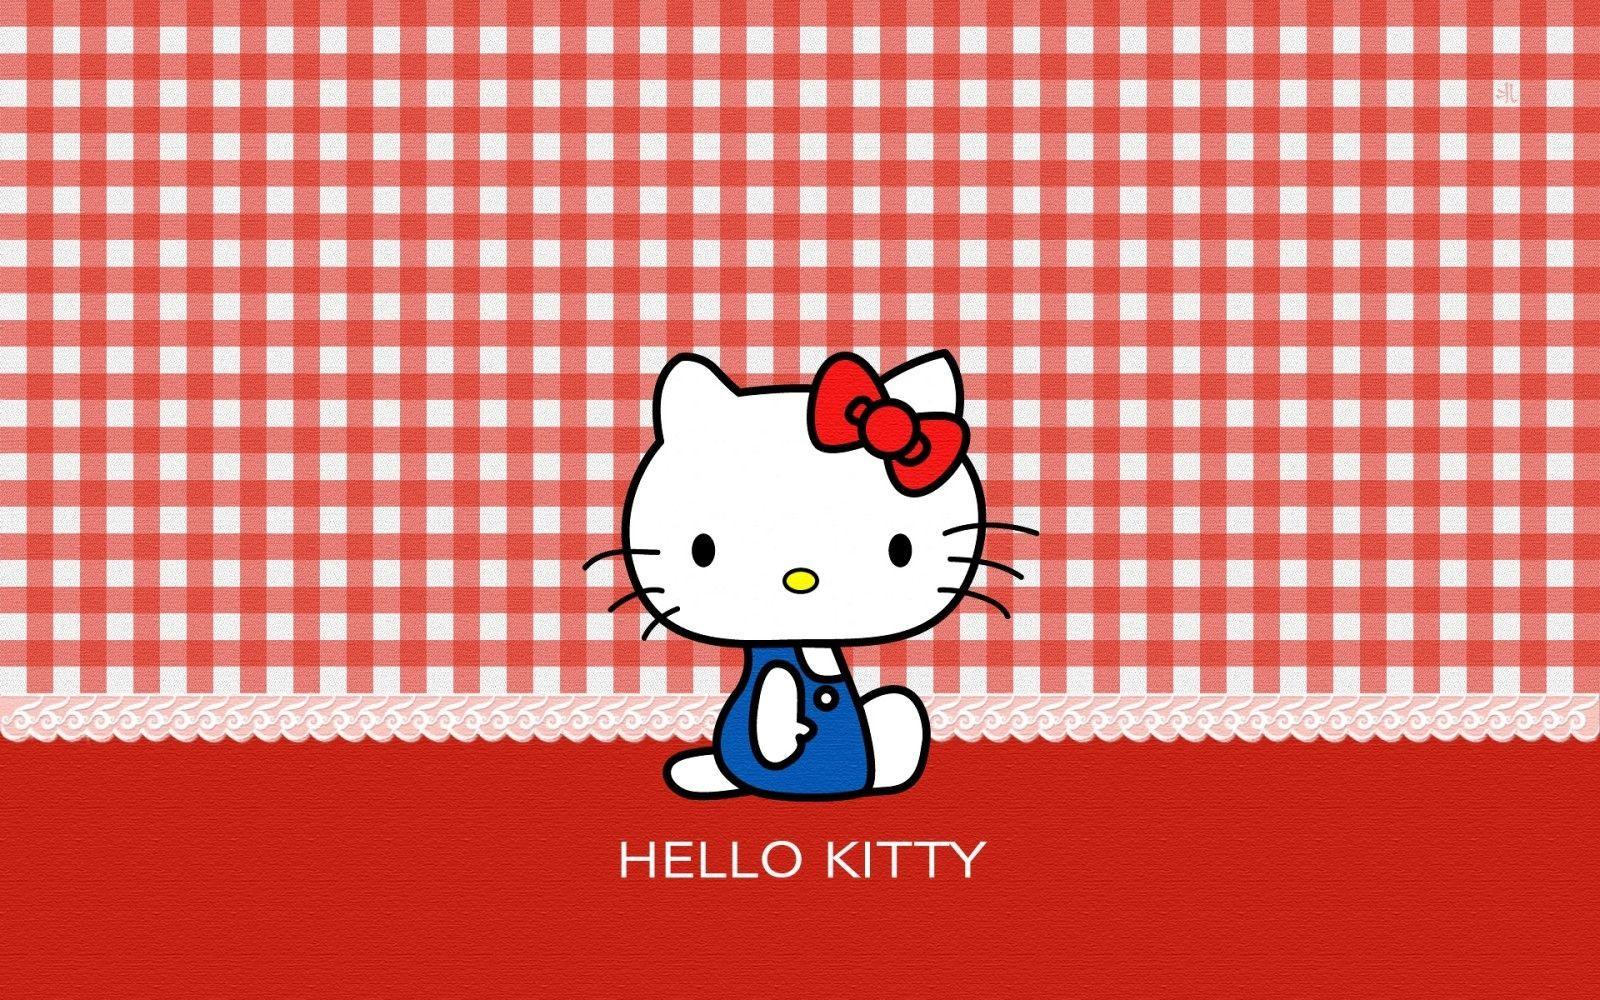 Hello Kitty Red Tiles. walluck